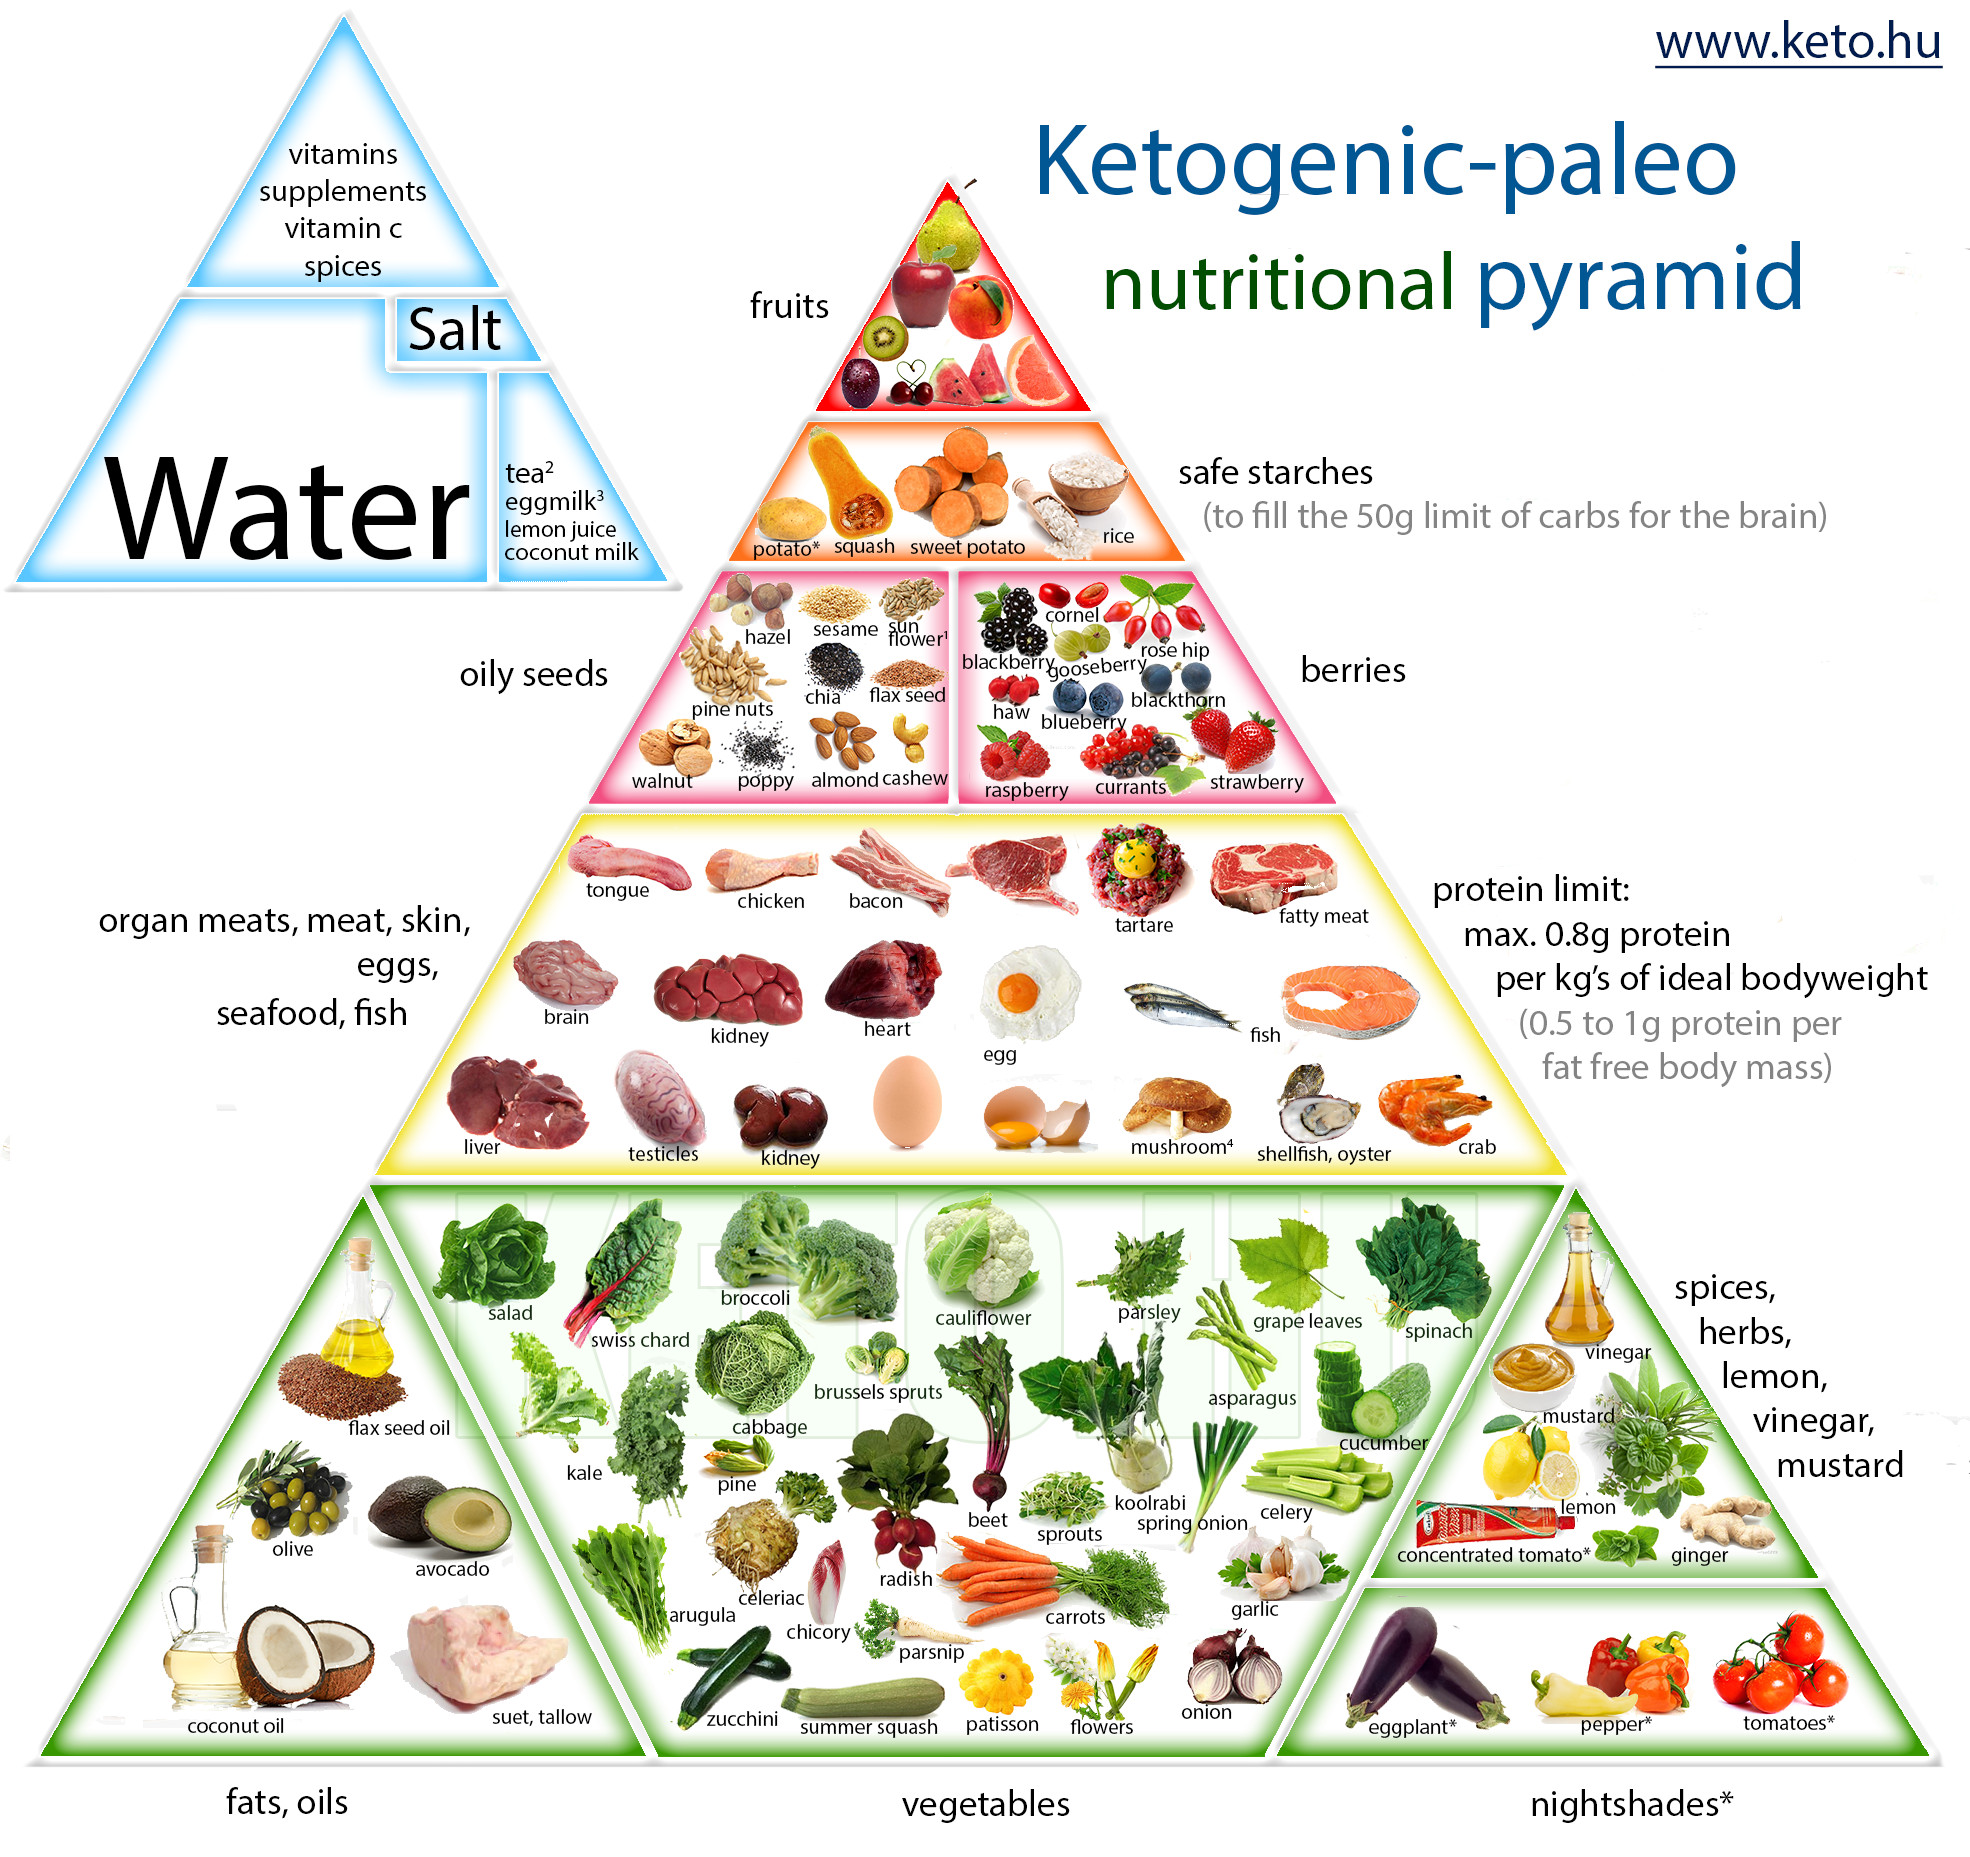 Keto Vs Paleo Diet
 ketogenic paleo nutrition pyramid